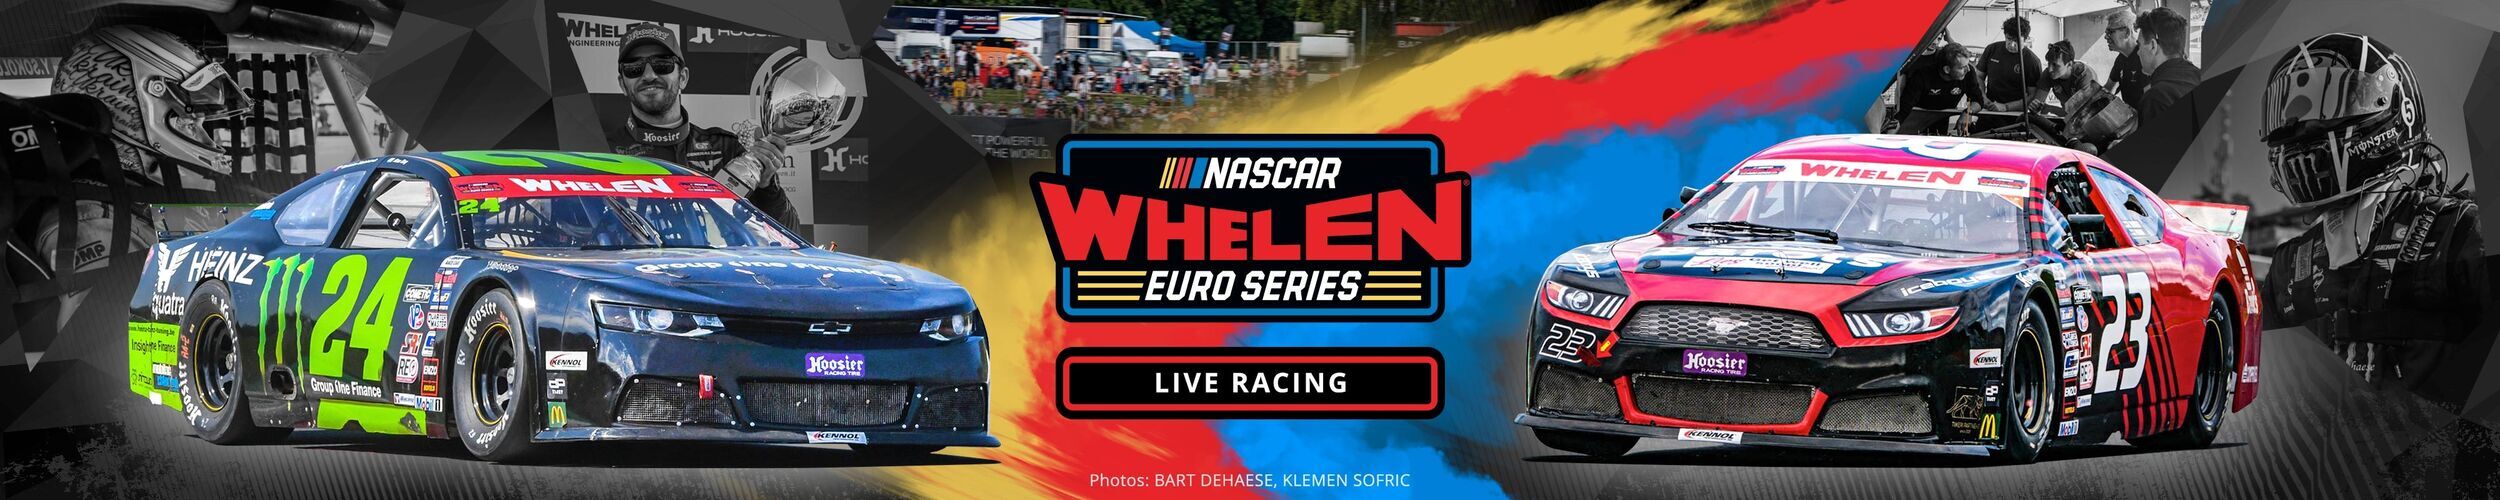 NASCAR Whelen Euro Series Live Racing